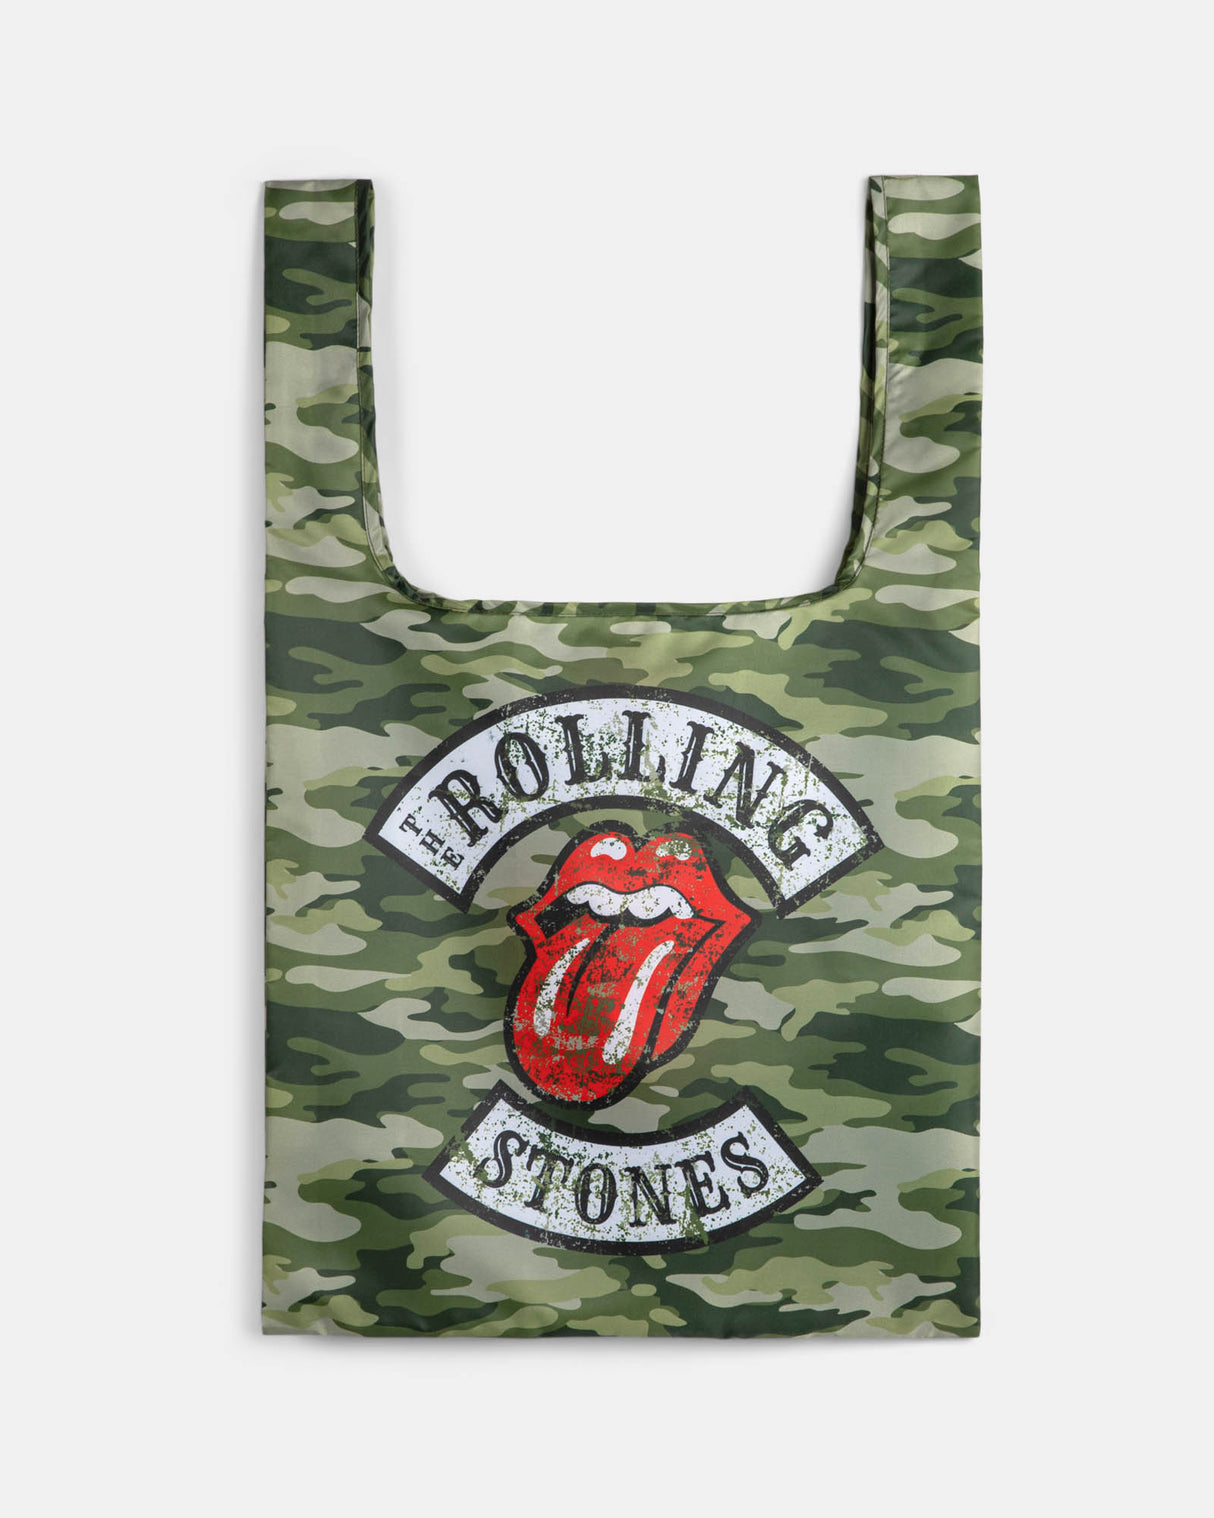 Rolling Stones - The Paddington - Tote